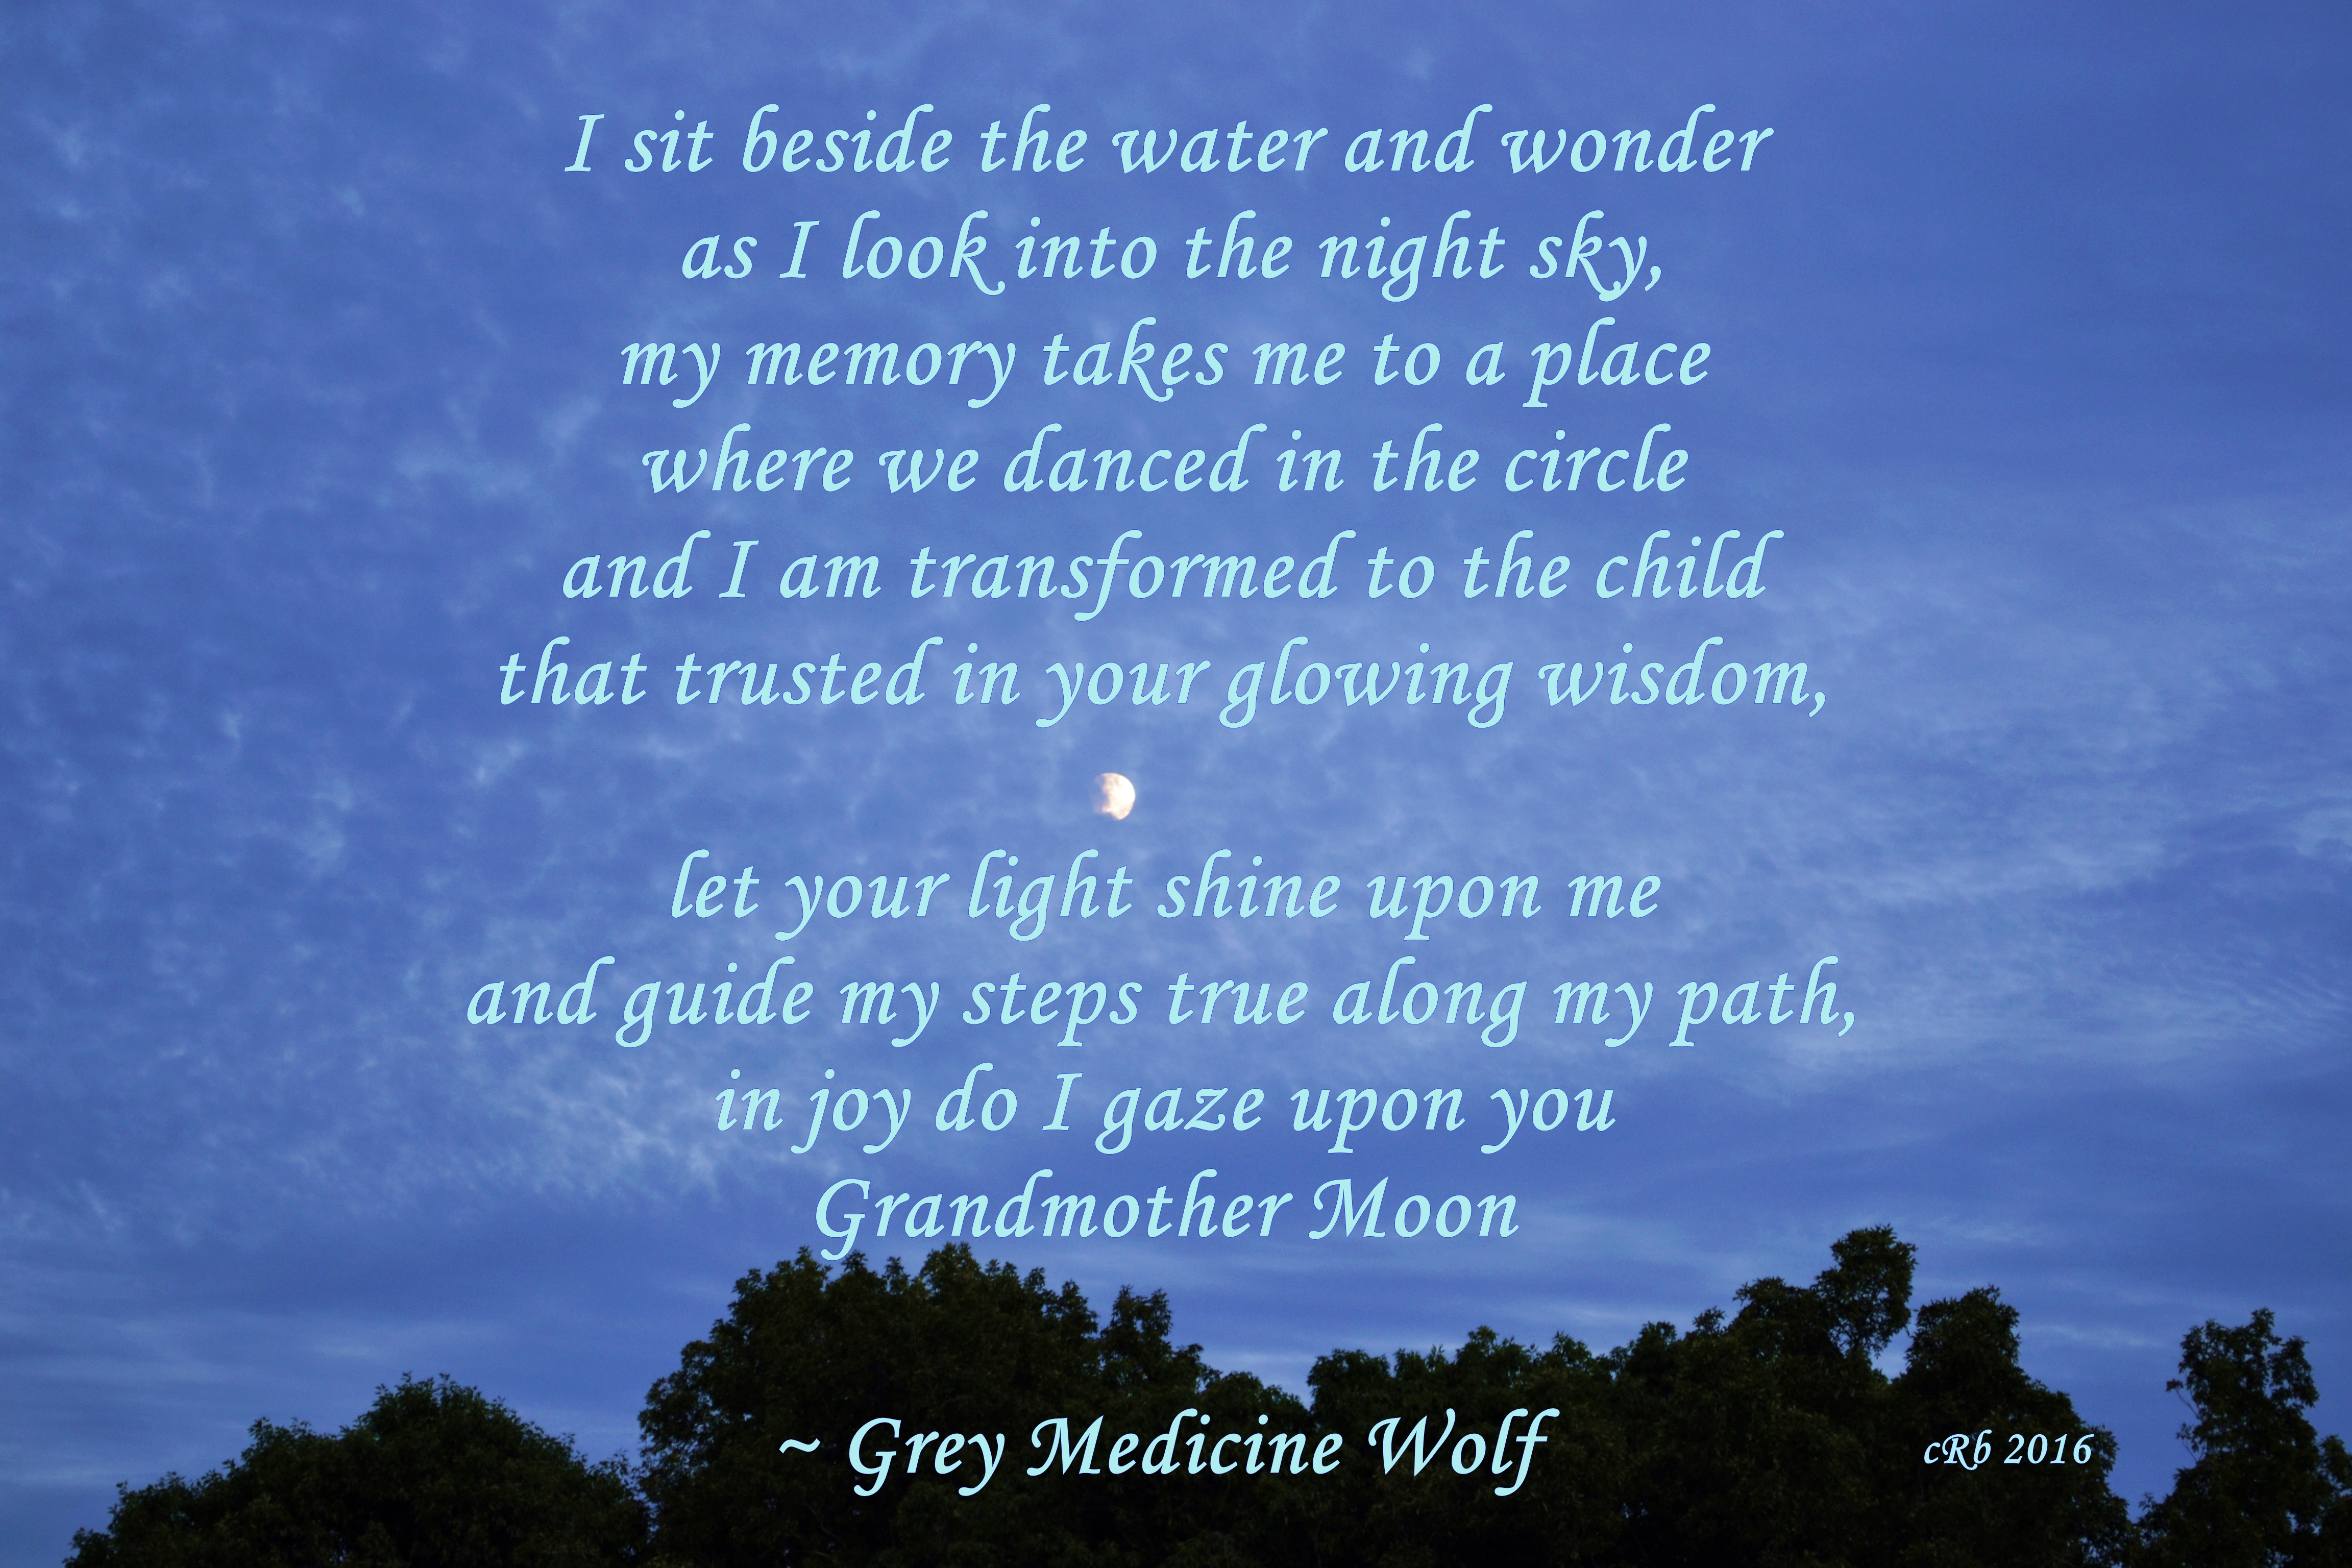 grandmother-moon-grey-medicinw-wolf.jpg